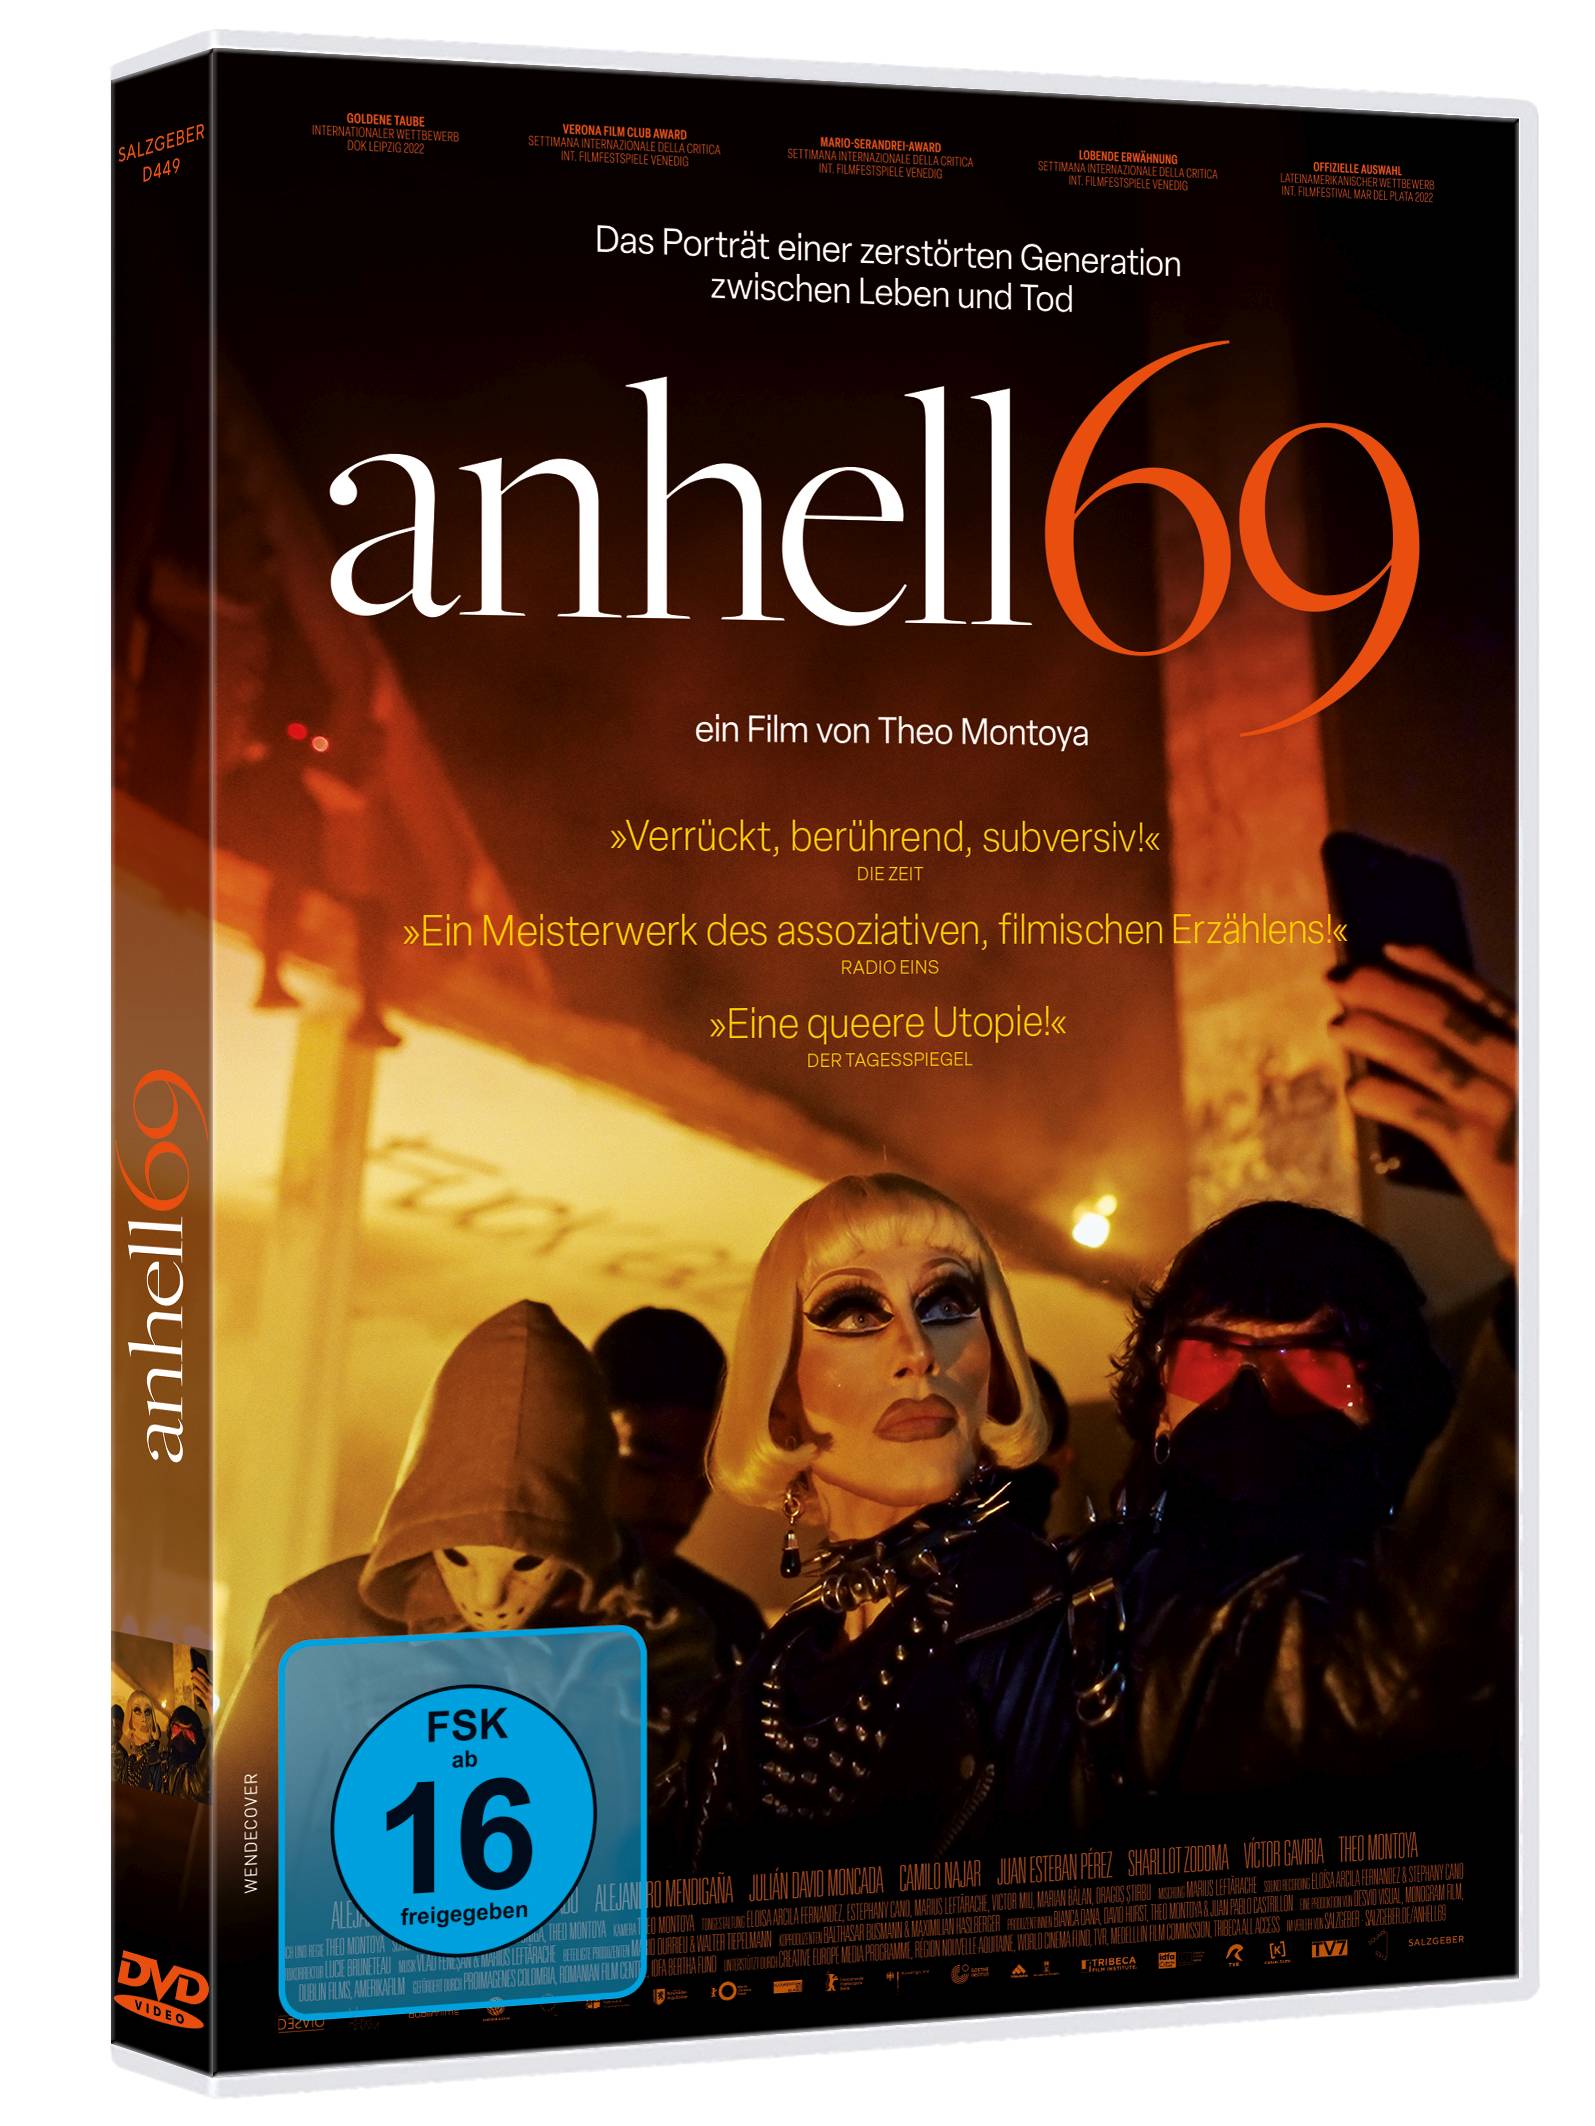 Anhell69 (OmU)